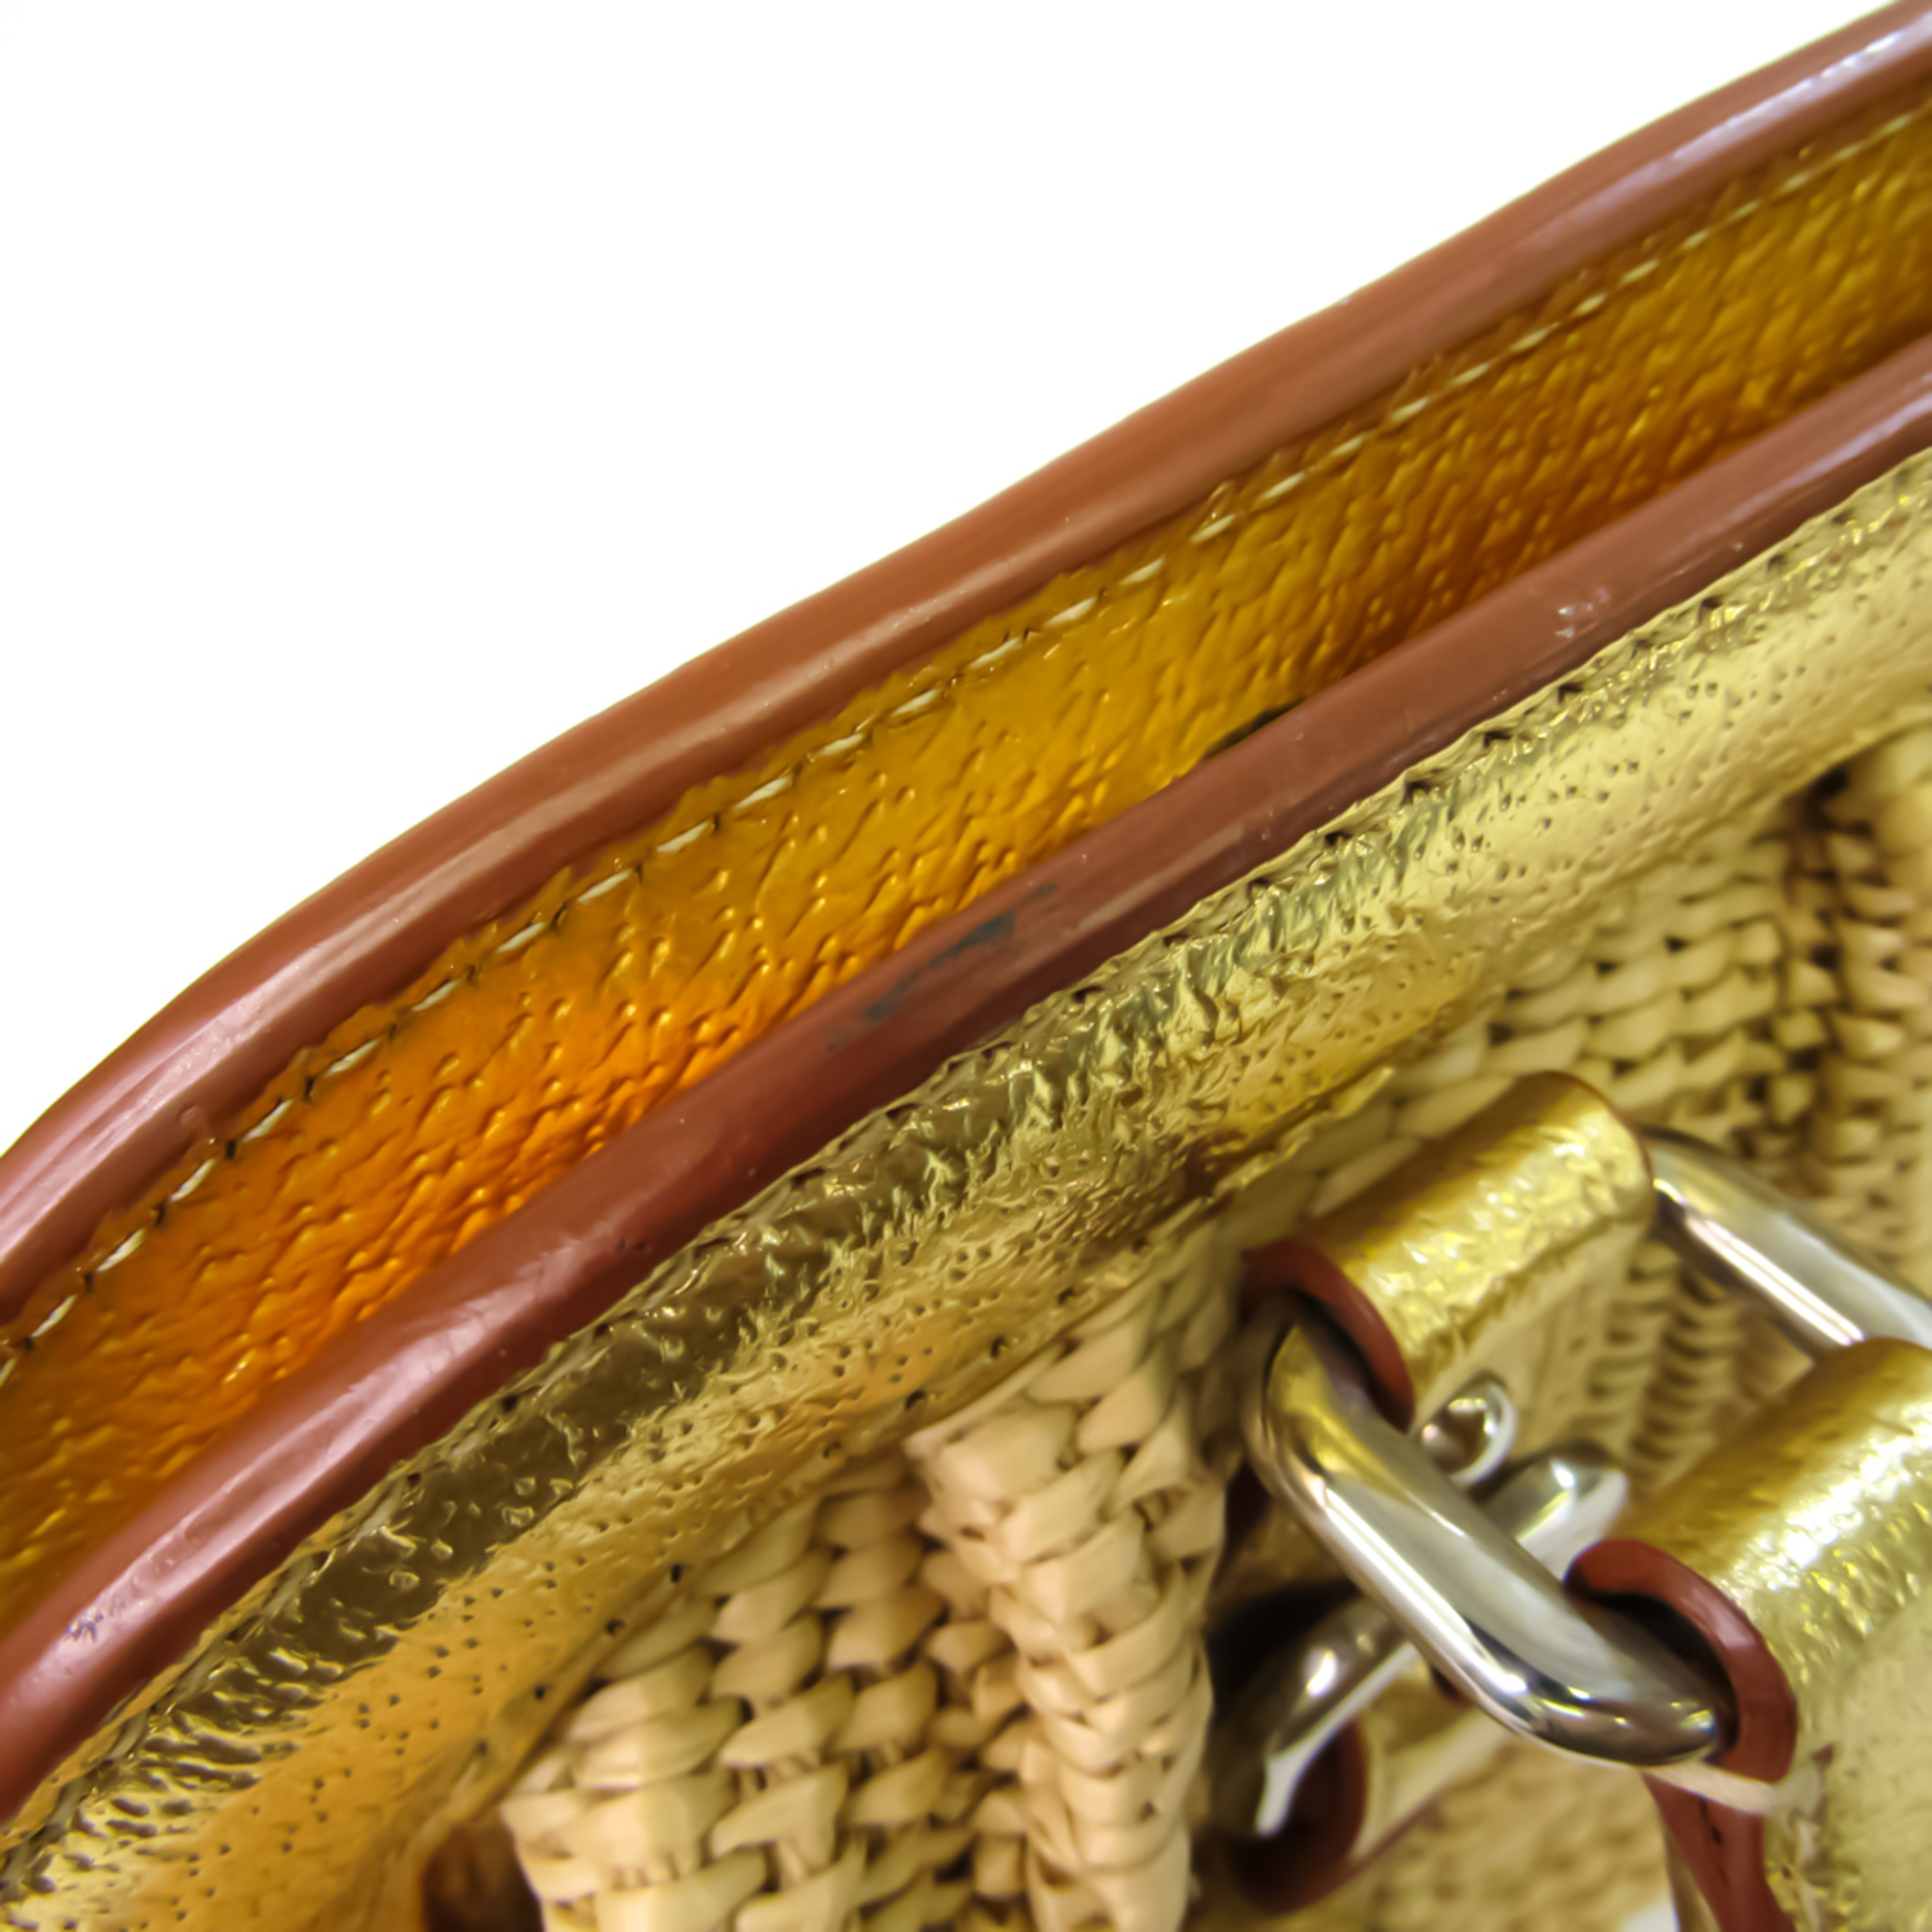 Prada Straw Jute BR3509 Women's Rayon,Cotton Handbag Beige,Gold